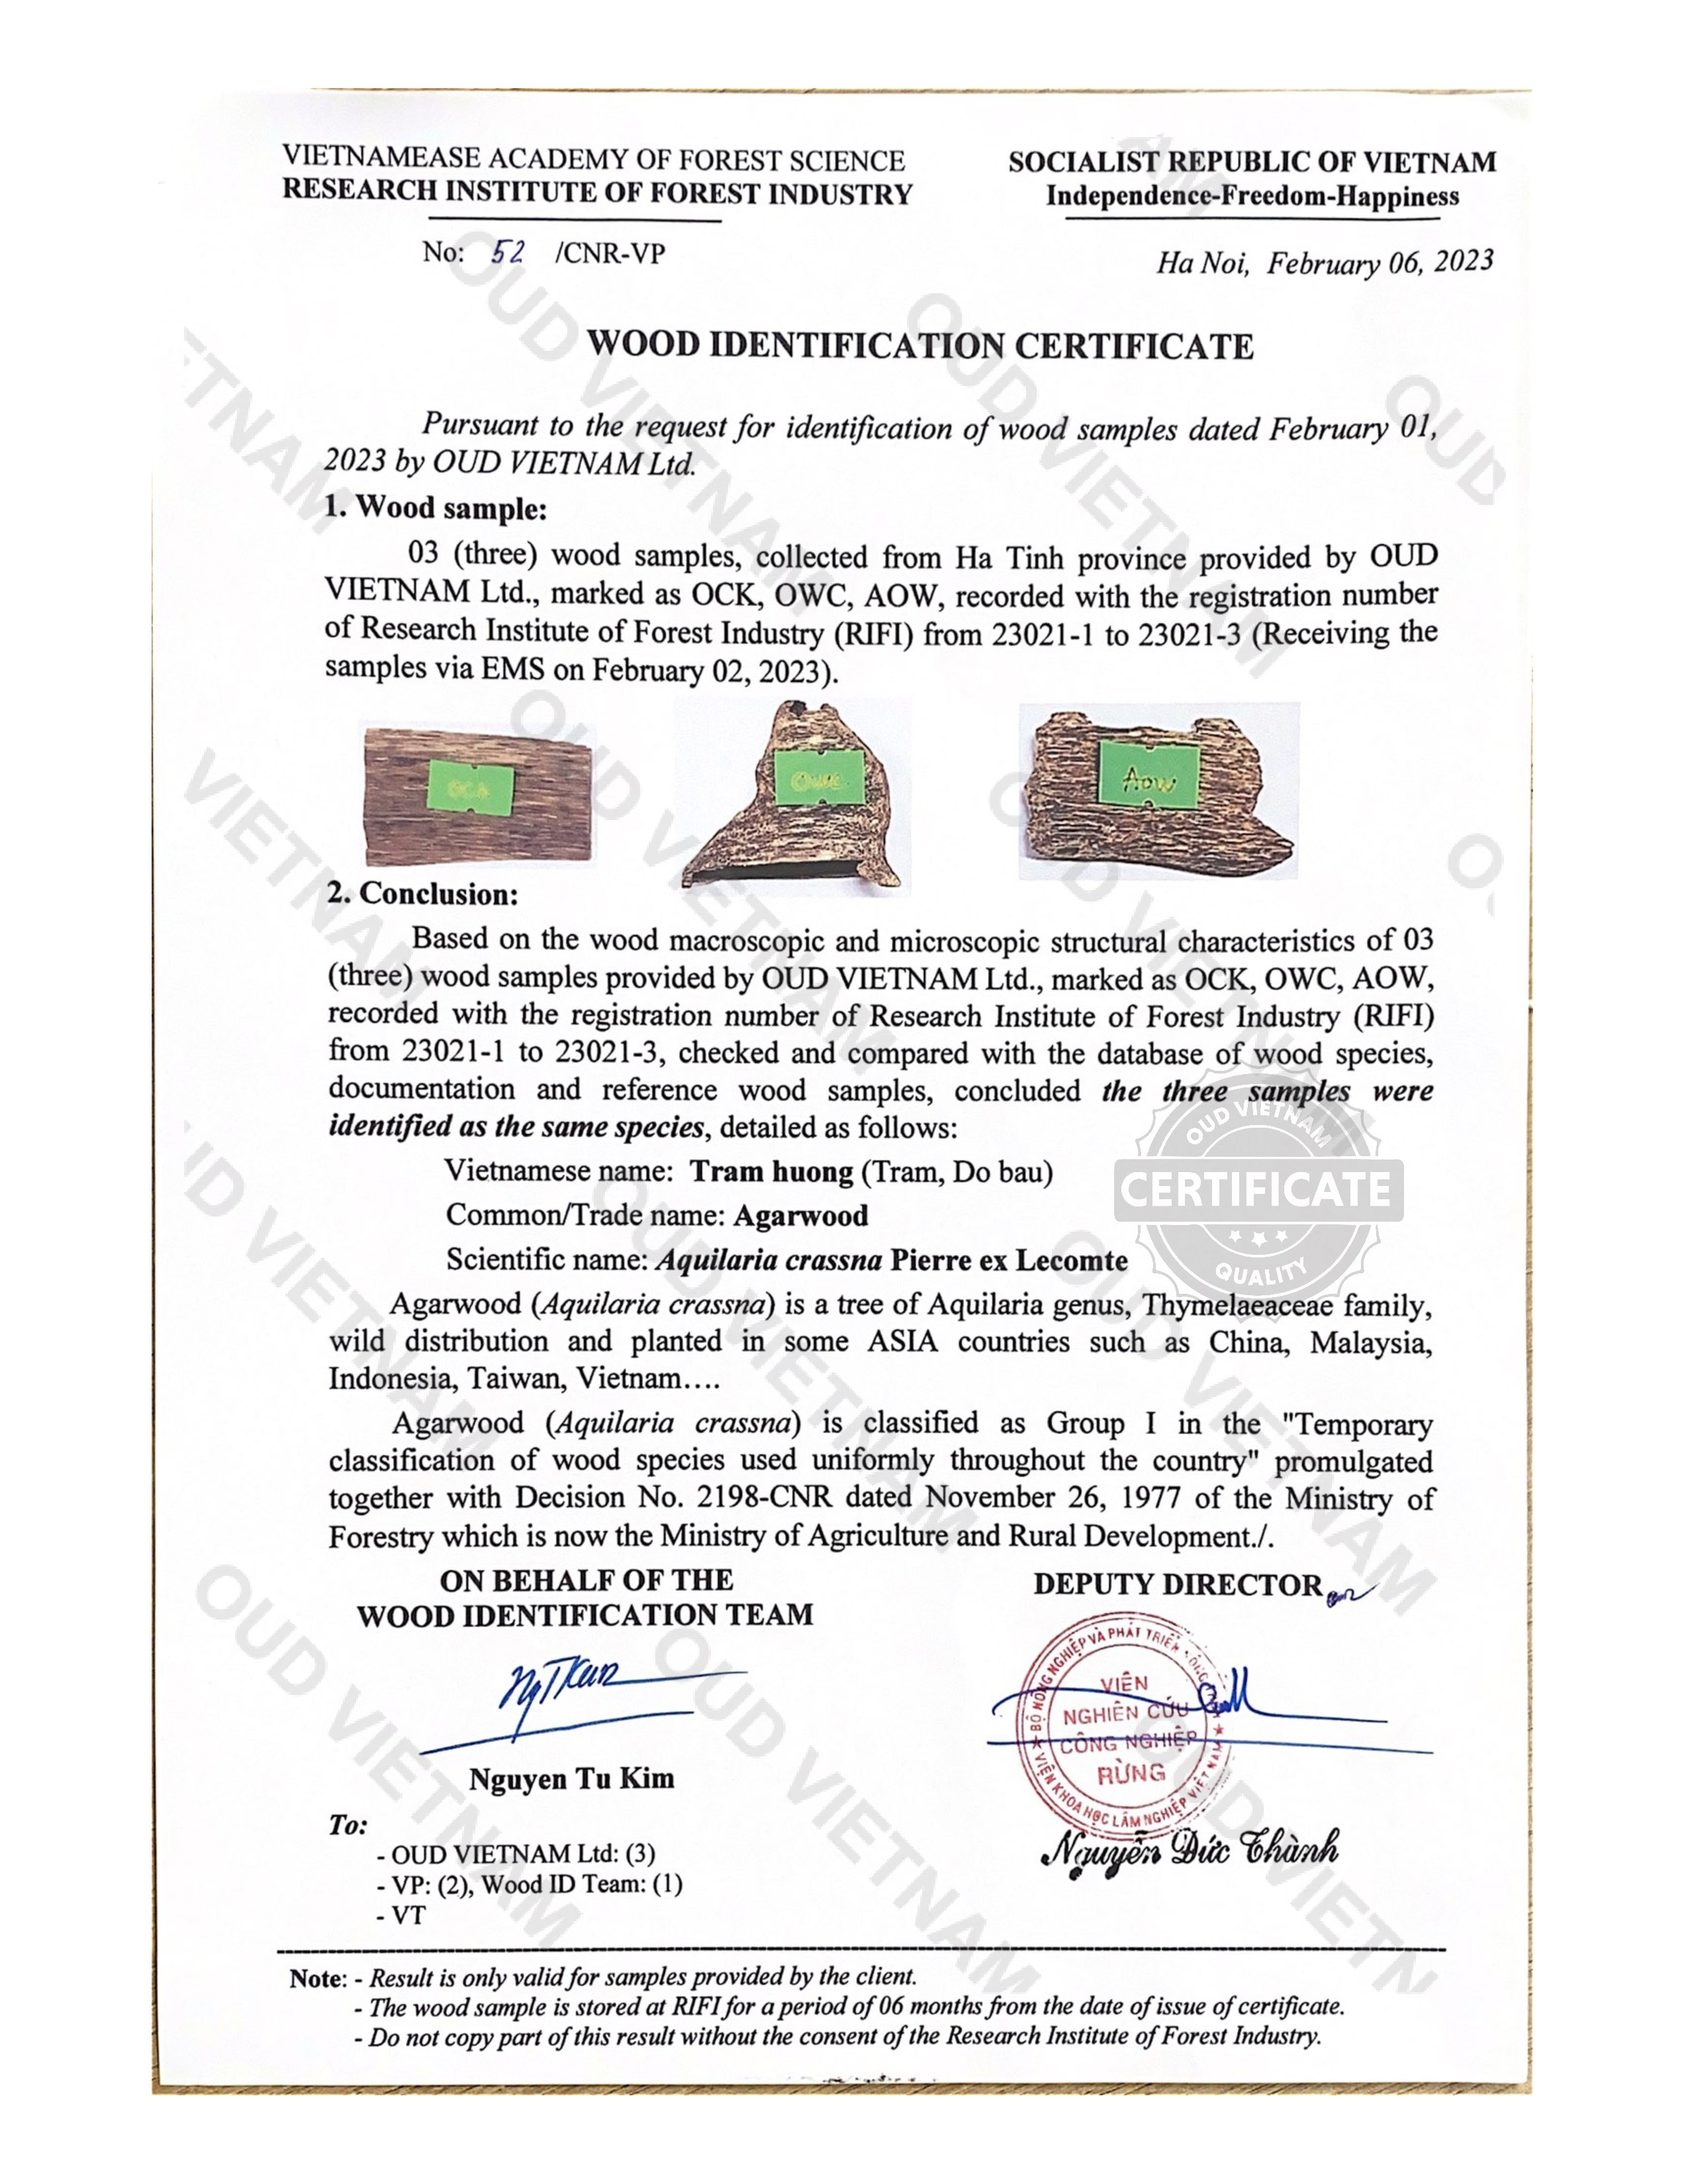 Wood Identification Certificate